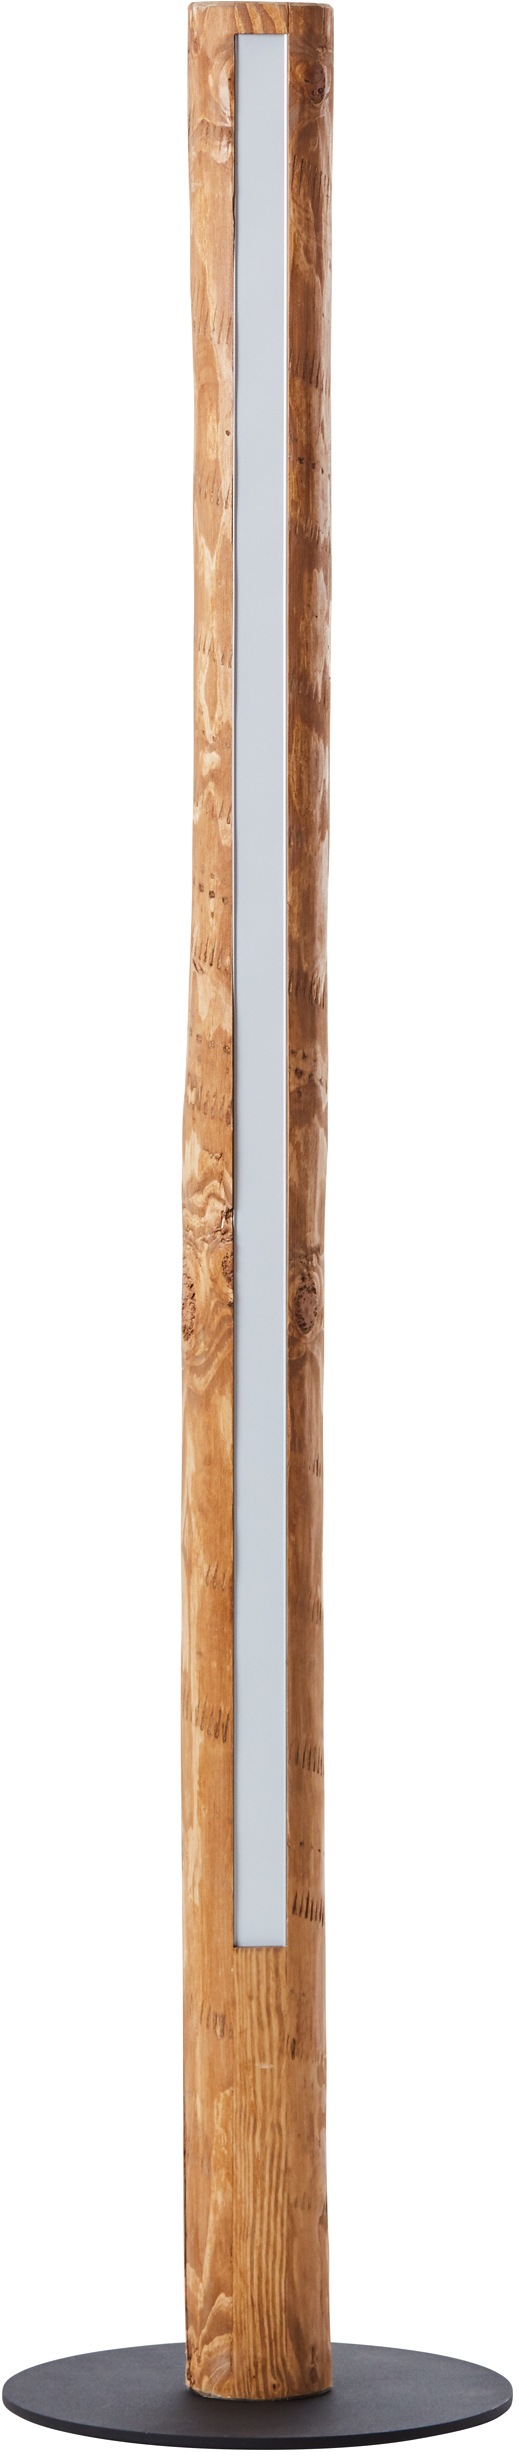 Brilliant LED Stehlampe »Odun«, 1 flammig-flammig, H 141 cm, dimmbar, 2900  lm, warmweiß, Holz/Metall, kiefer gebeizt | BAUR